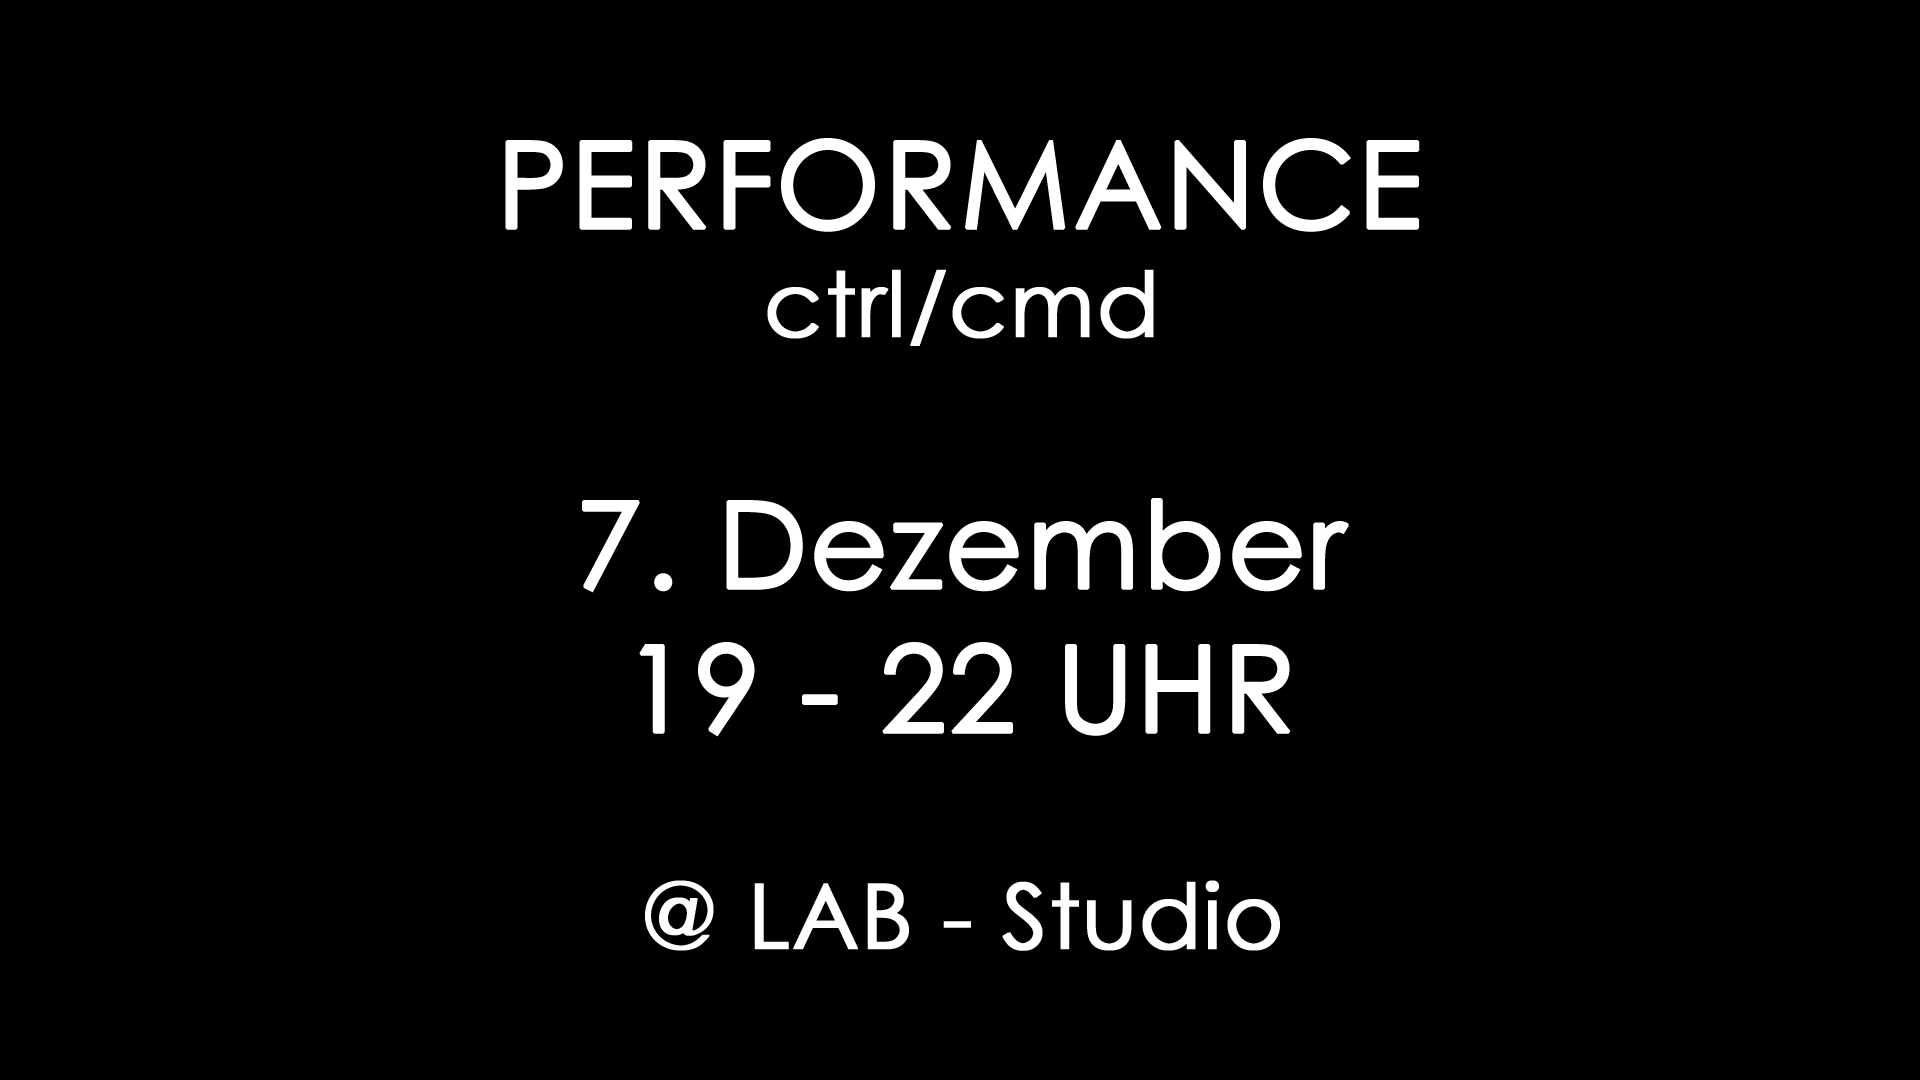 ctrl-cmd-flyer-performance-lab-studio